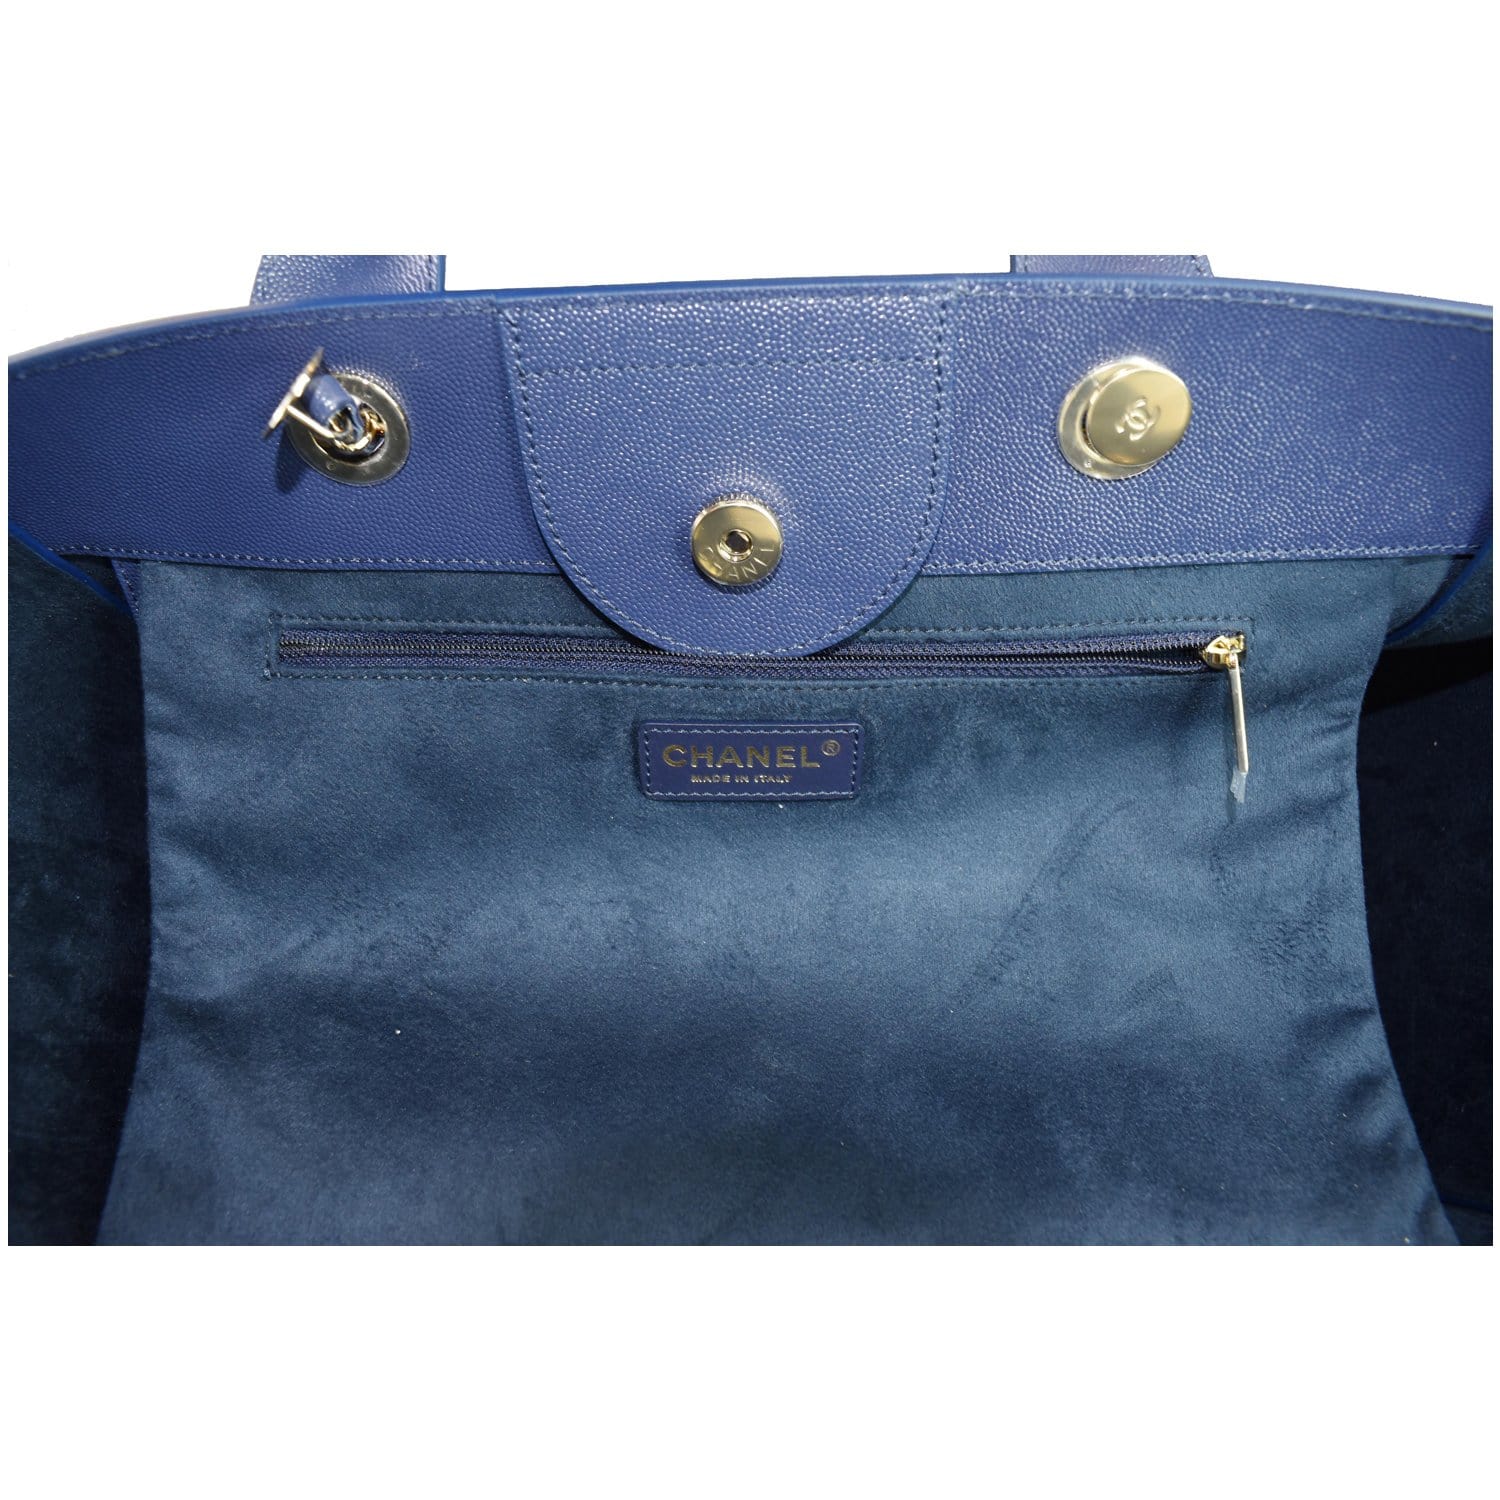 Bag Organizer for Chanel Deauville Tote Medium (Fixed Zipper Top Cover) - Seafoam Green